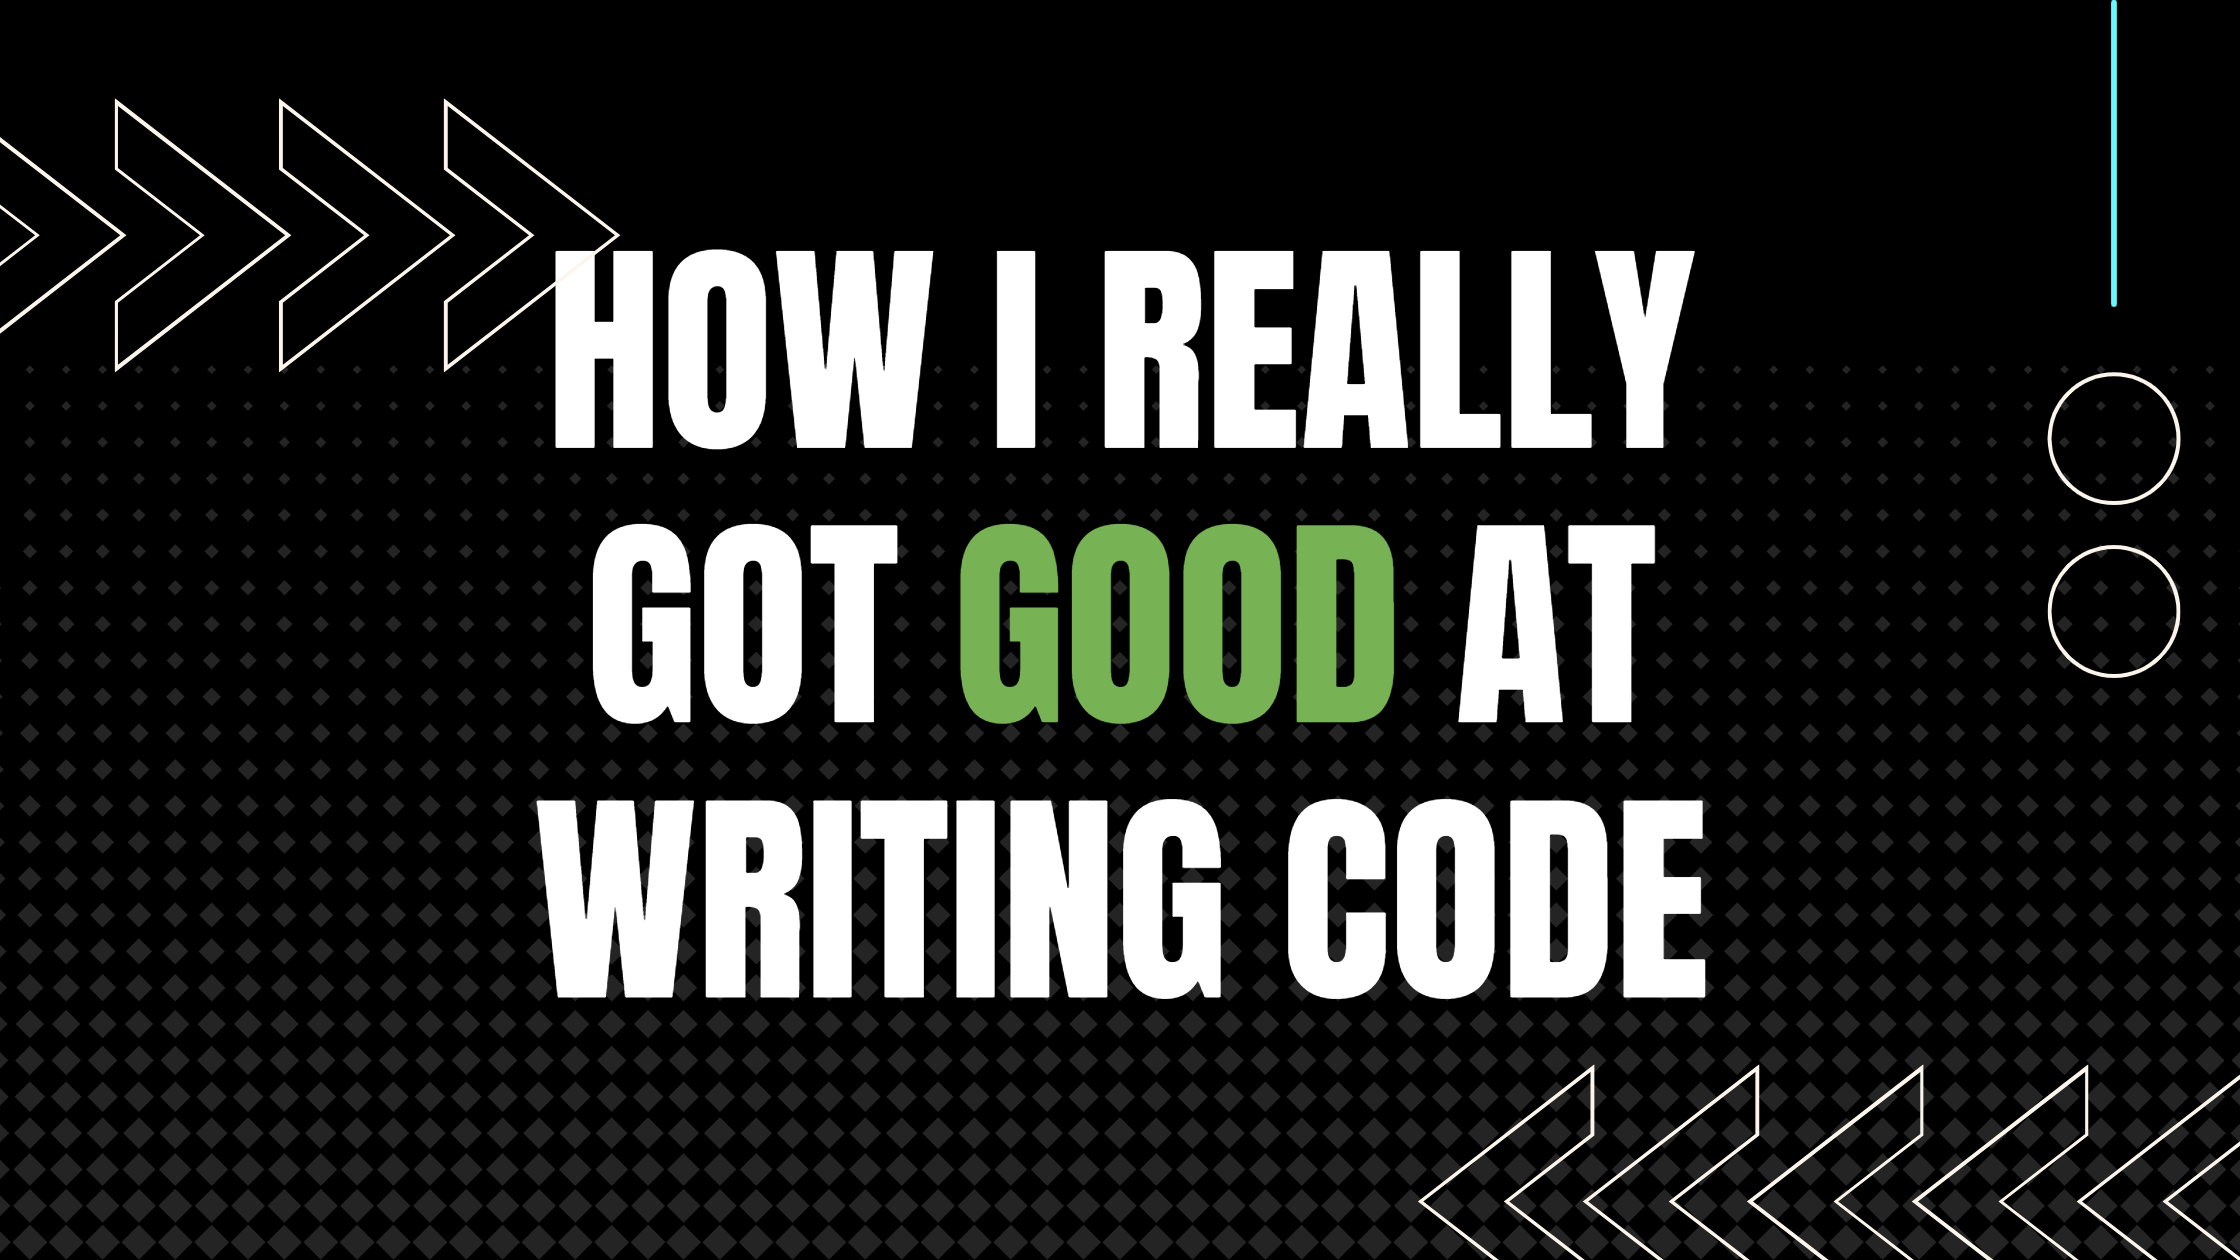 How I really got good at writing code